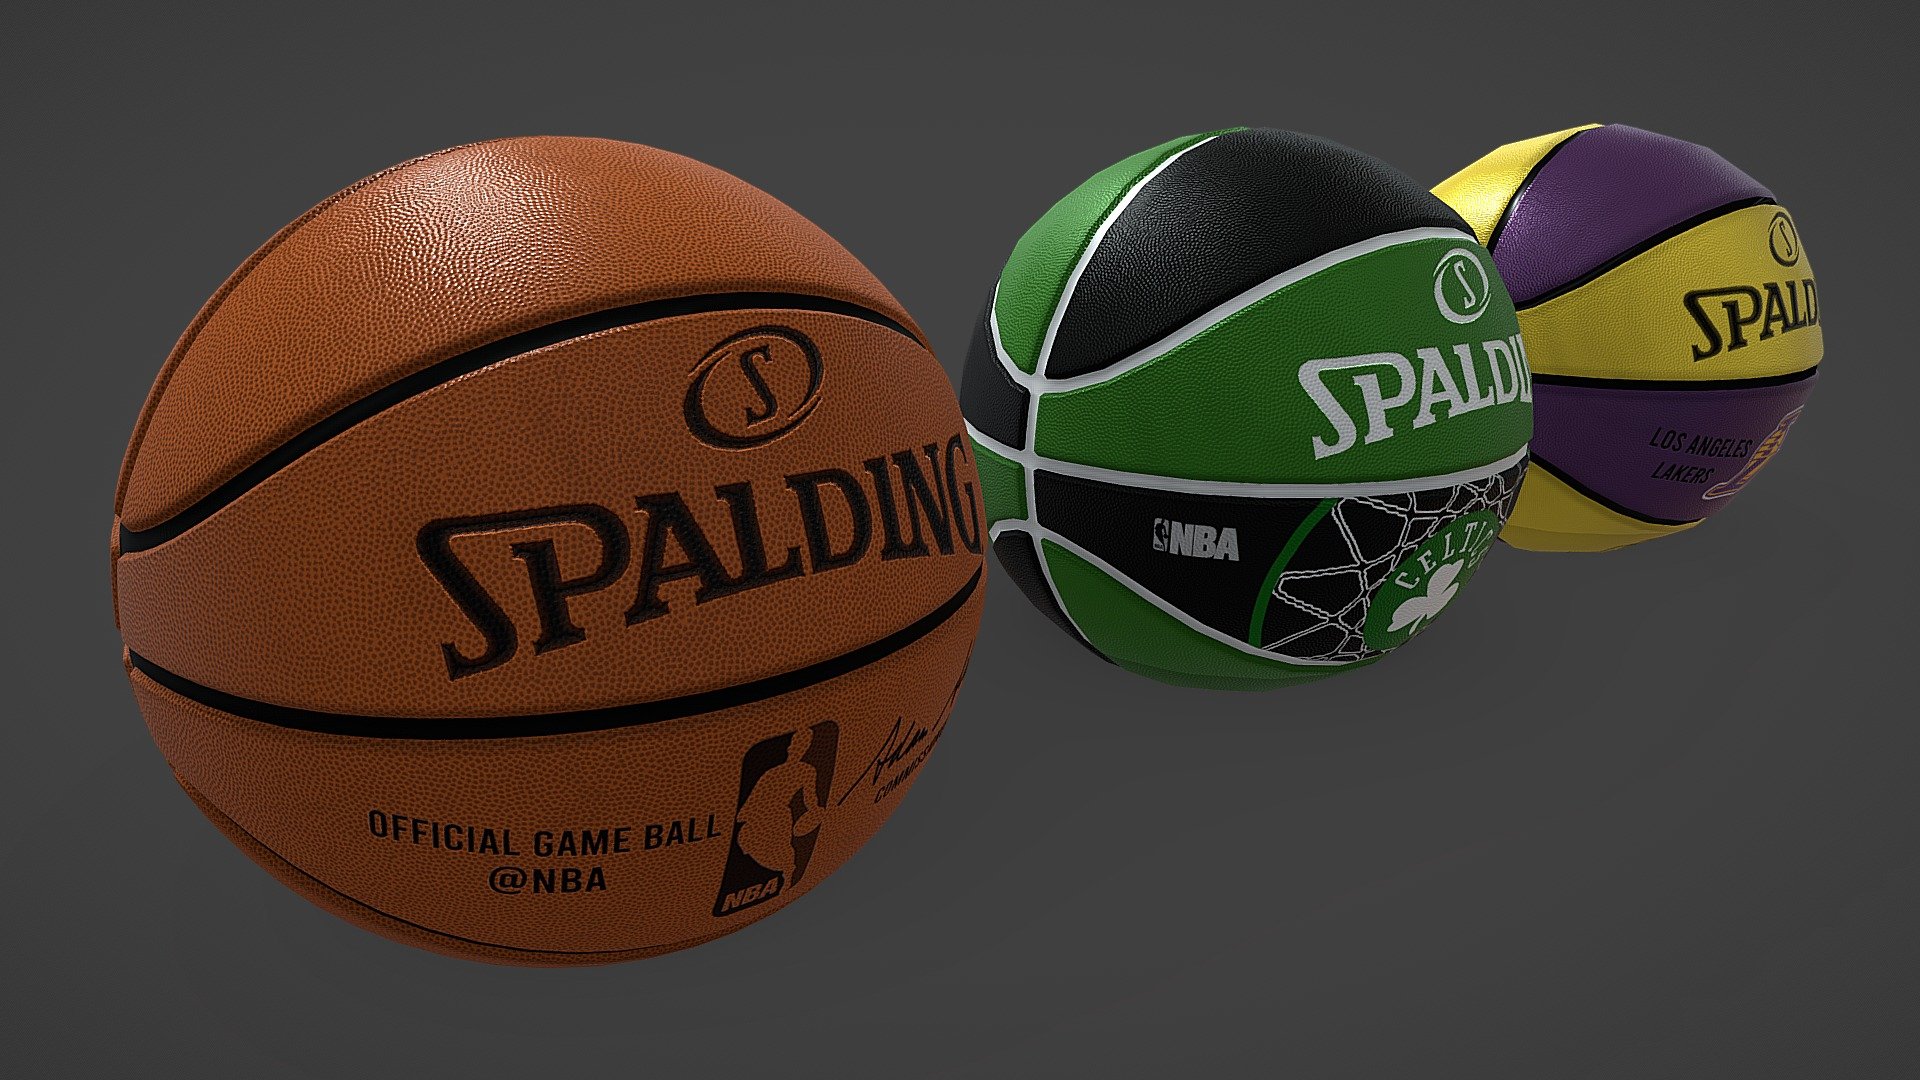 Spalding ball model. 
2K textures + 4K textures, PBR.
File formats - FBX, OBJ, 3Ds Max (2018).
LOD1 - 9440 Tris.
LOD2 - 2340 Tris.
LOD3 - 1372 Tris.
Textures for Standard ball, Lakers, Celtics and Aba.
More Information Here (Artstation Link)
 - Basketball Spalding Ball - Fan Art - 3D model by Korax254 (@Tonifo254) 3d model